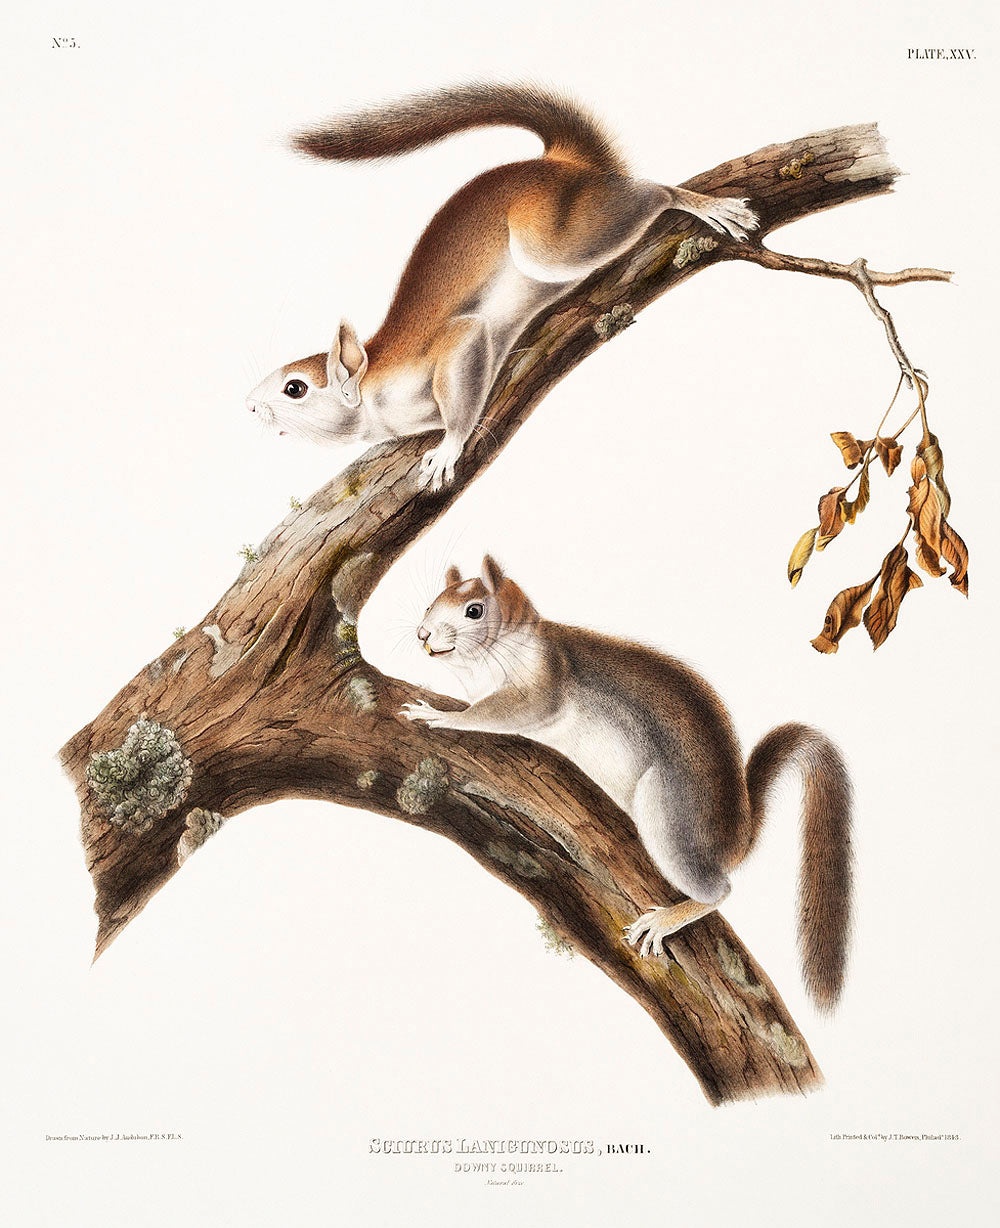 Downy Squirrel (Sciurus Lanigunosus) by John James Audubon